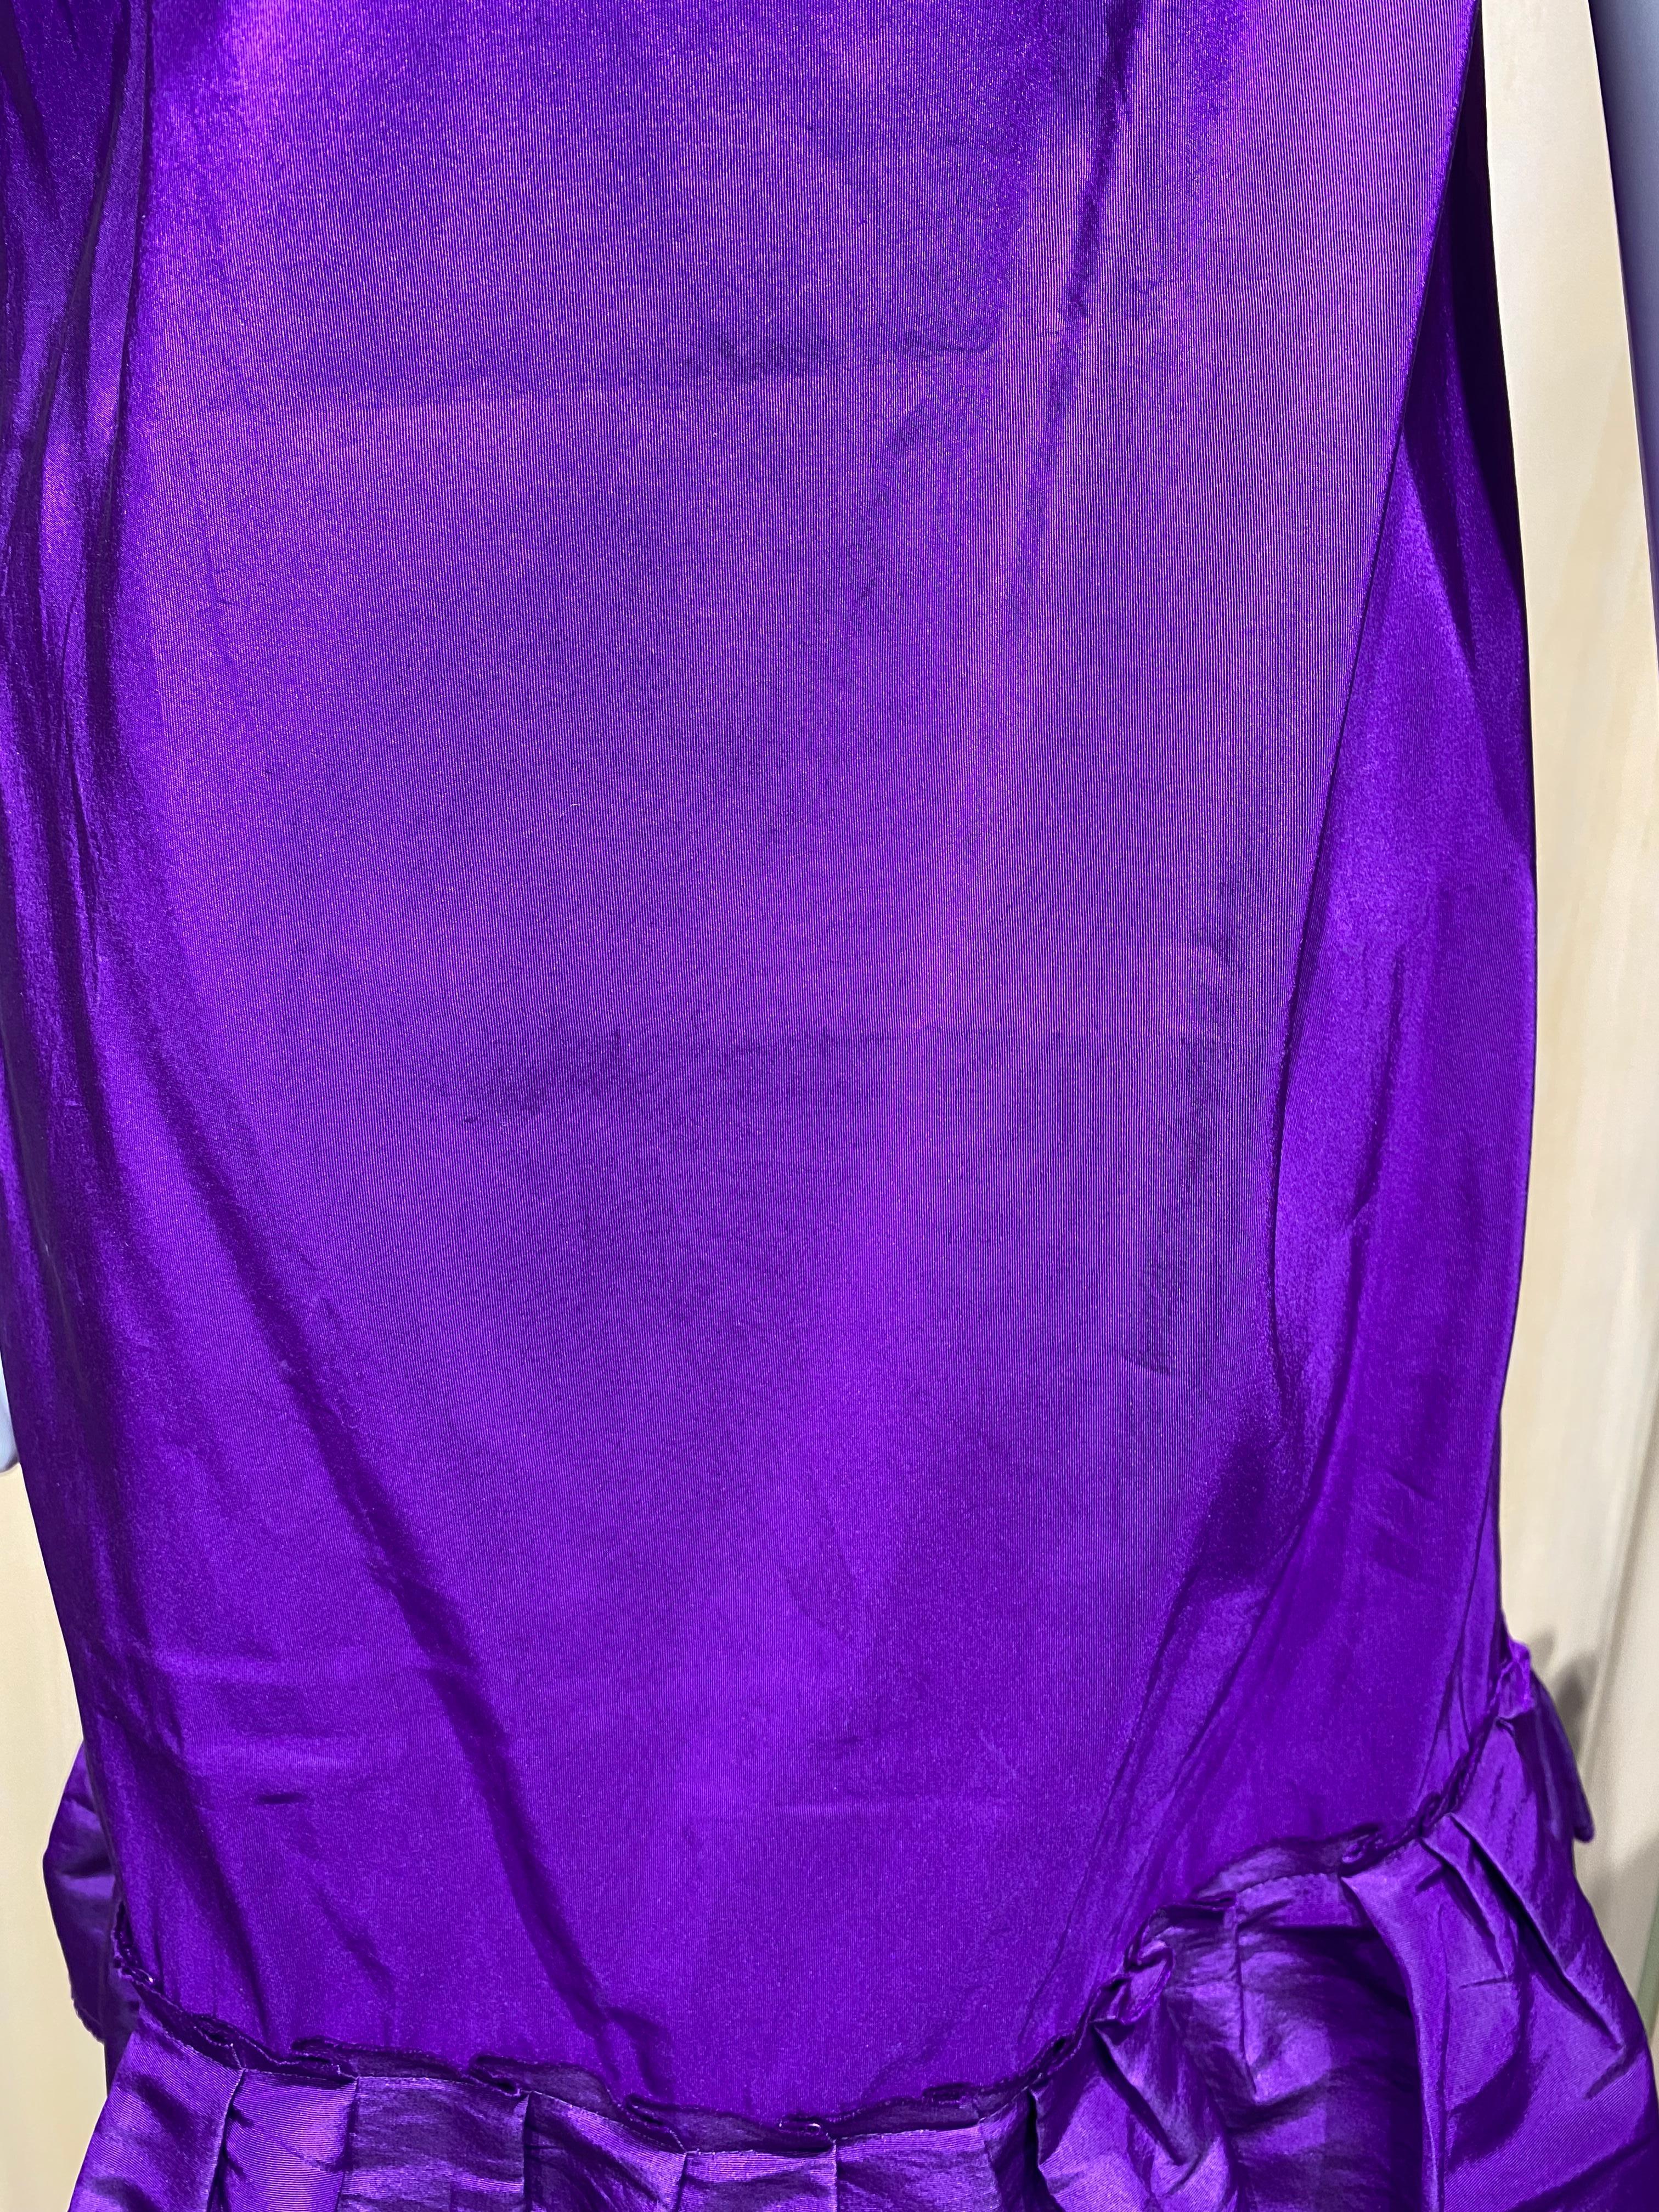 LANVIN by Alber Elbaz Purple Silk Strapless Cocktail Dress For Sale 3